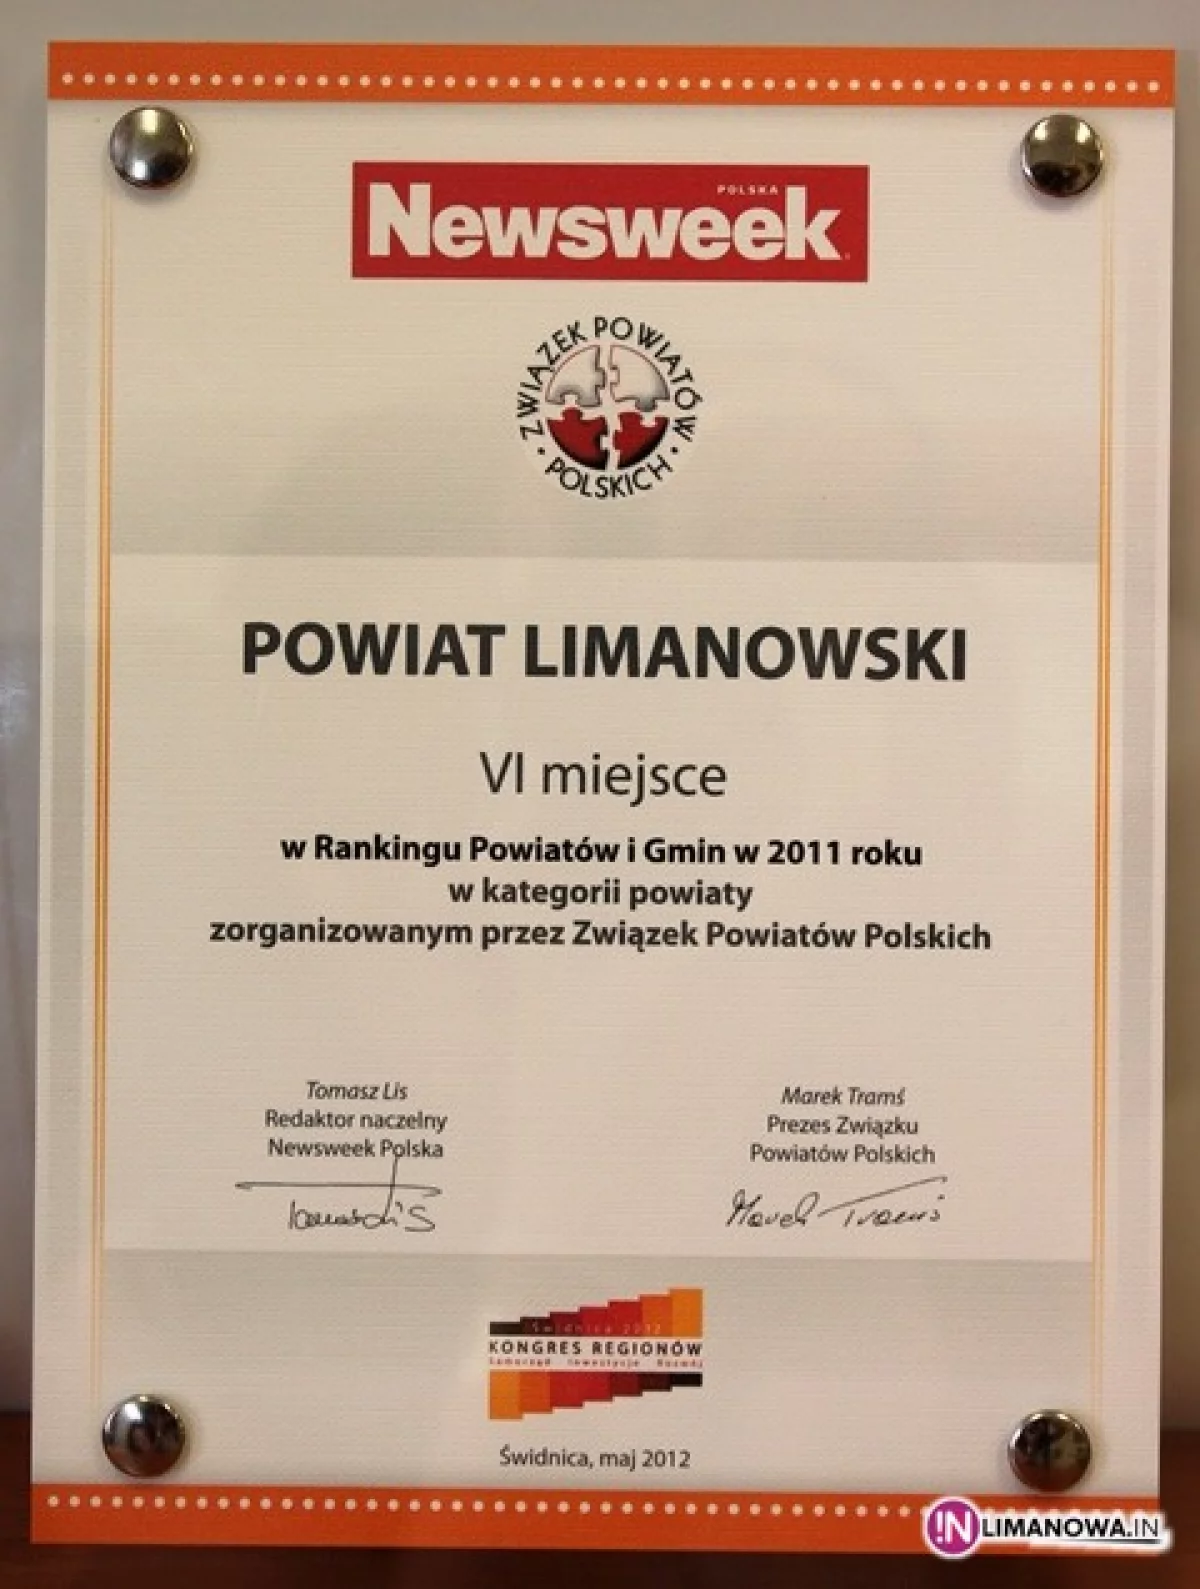 VI miejsce według Newseek Polska